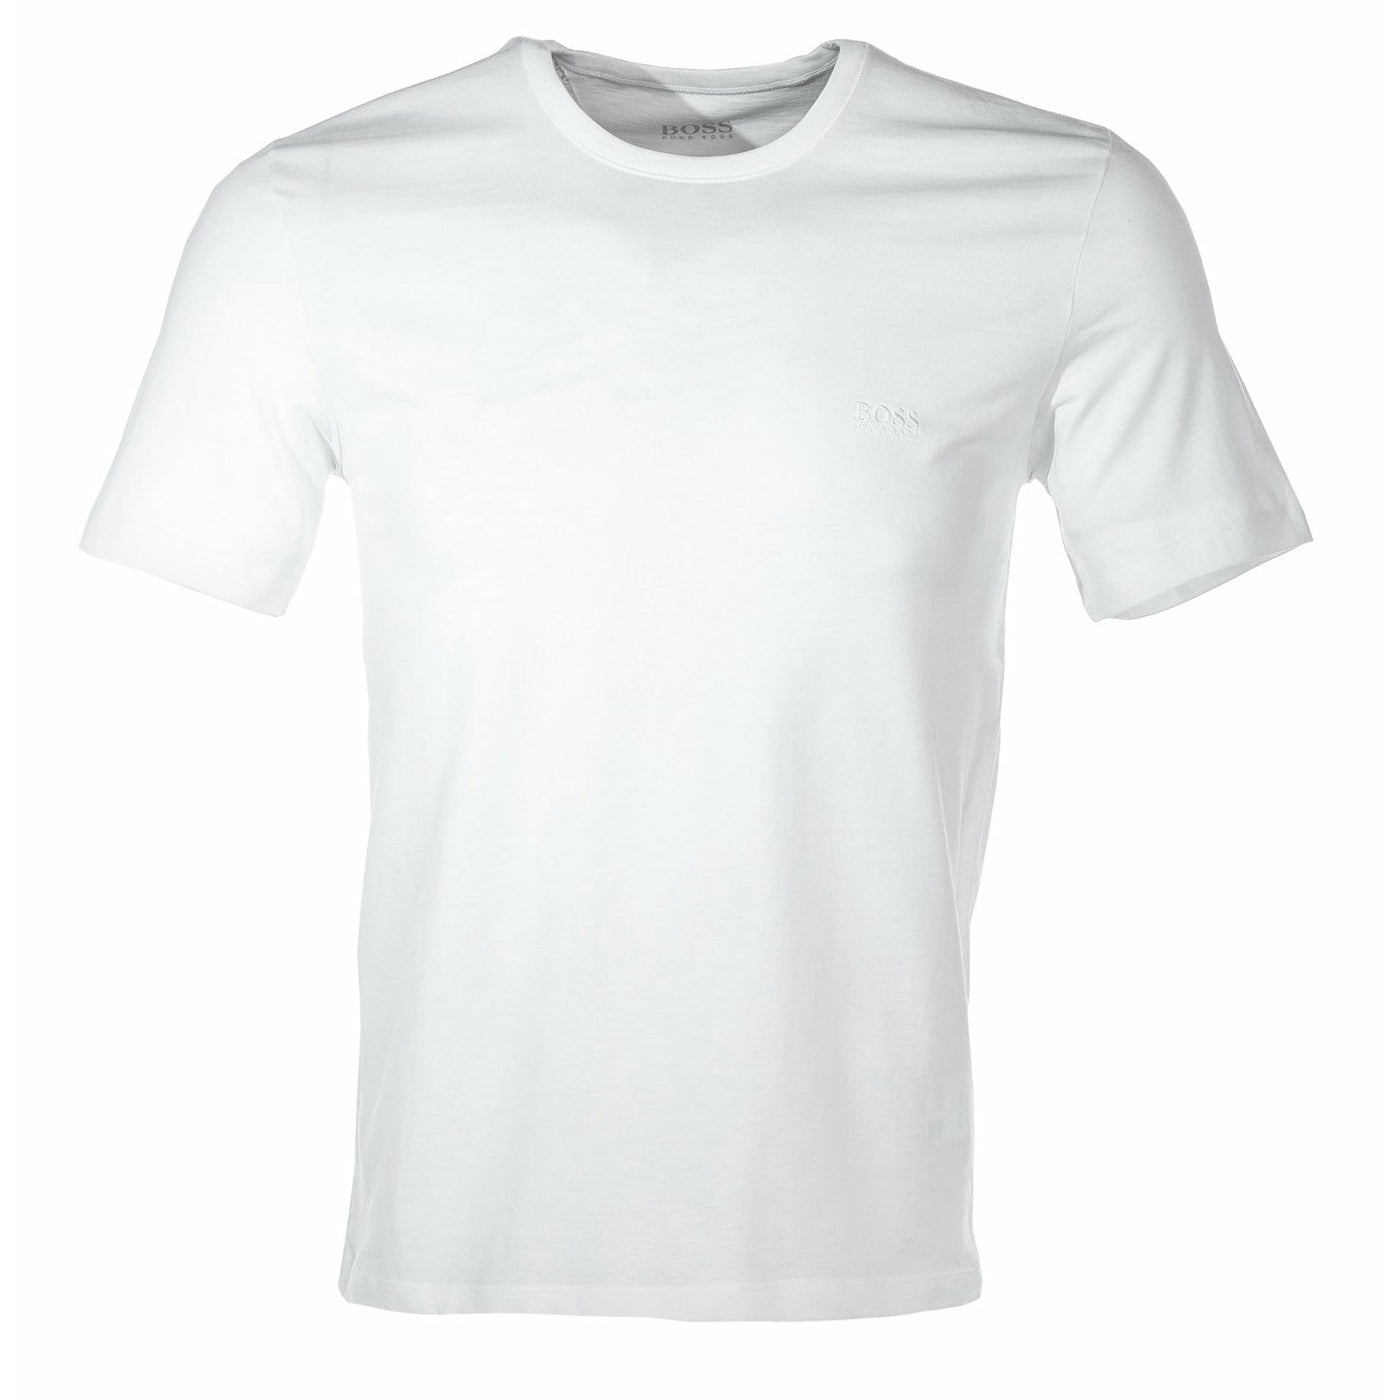 BOSS T Shirt 3 Pack in White Black Grey white front 